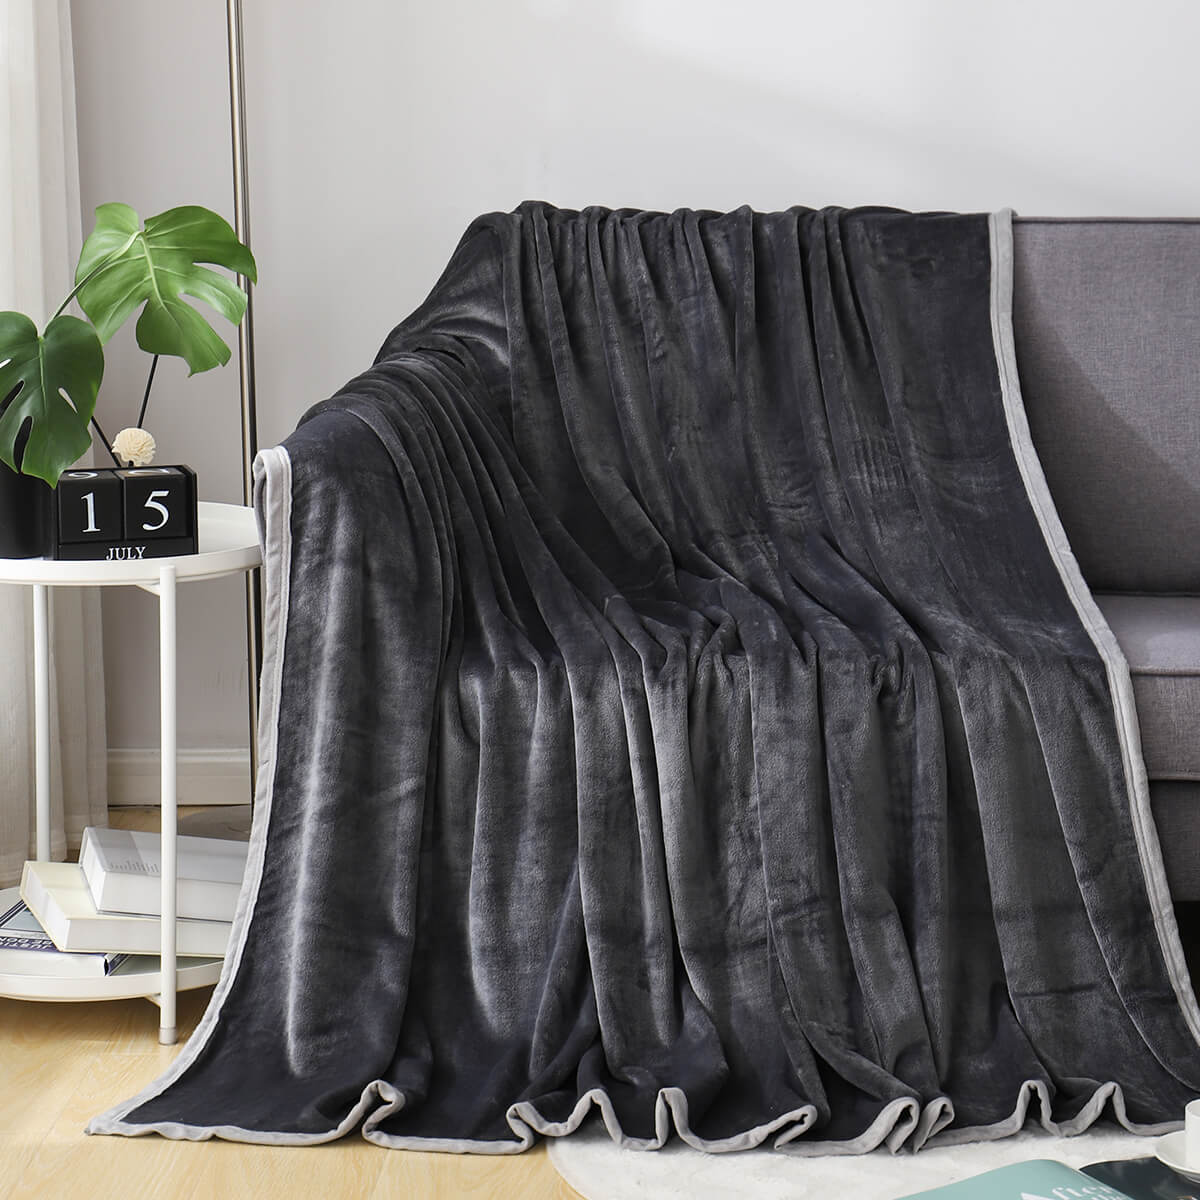 RKSB-0008 Flannel Fleece Blanket Set, Plush Warm Throw Blanket, Fluffy Fuzzy Microfiber Bedspread Blanket for Settees, Sofa Or Chairs